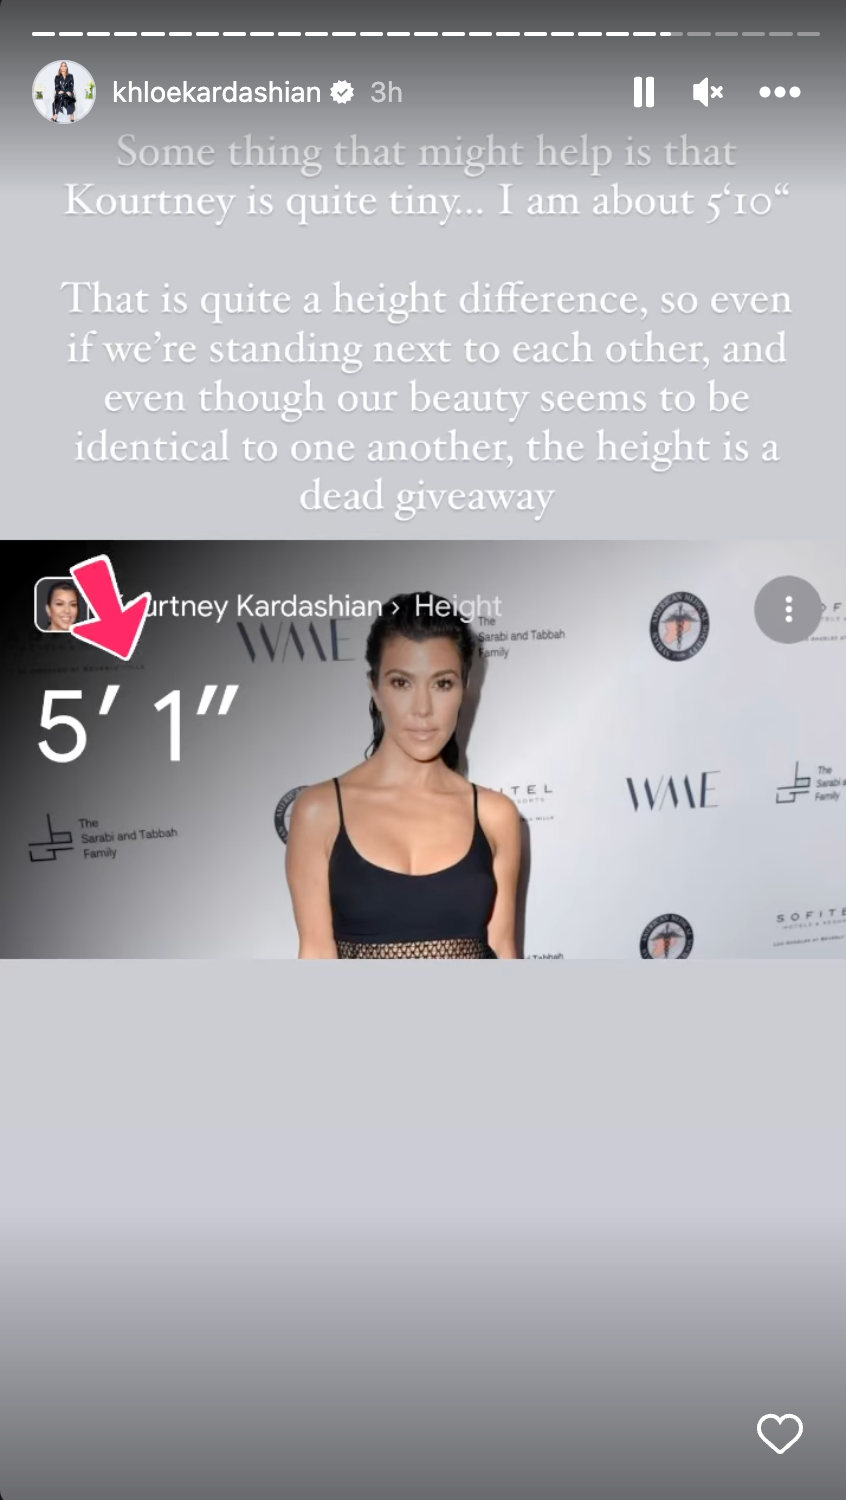 Khloe Kardashian shared funny presentation to stop fans for mistaking her for sister Kourtney Kardashian